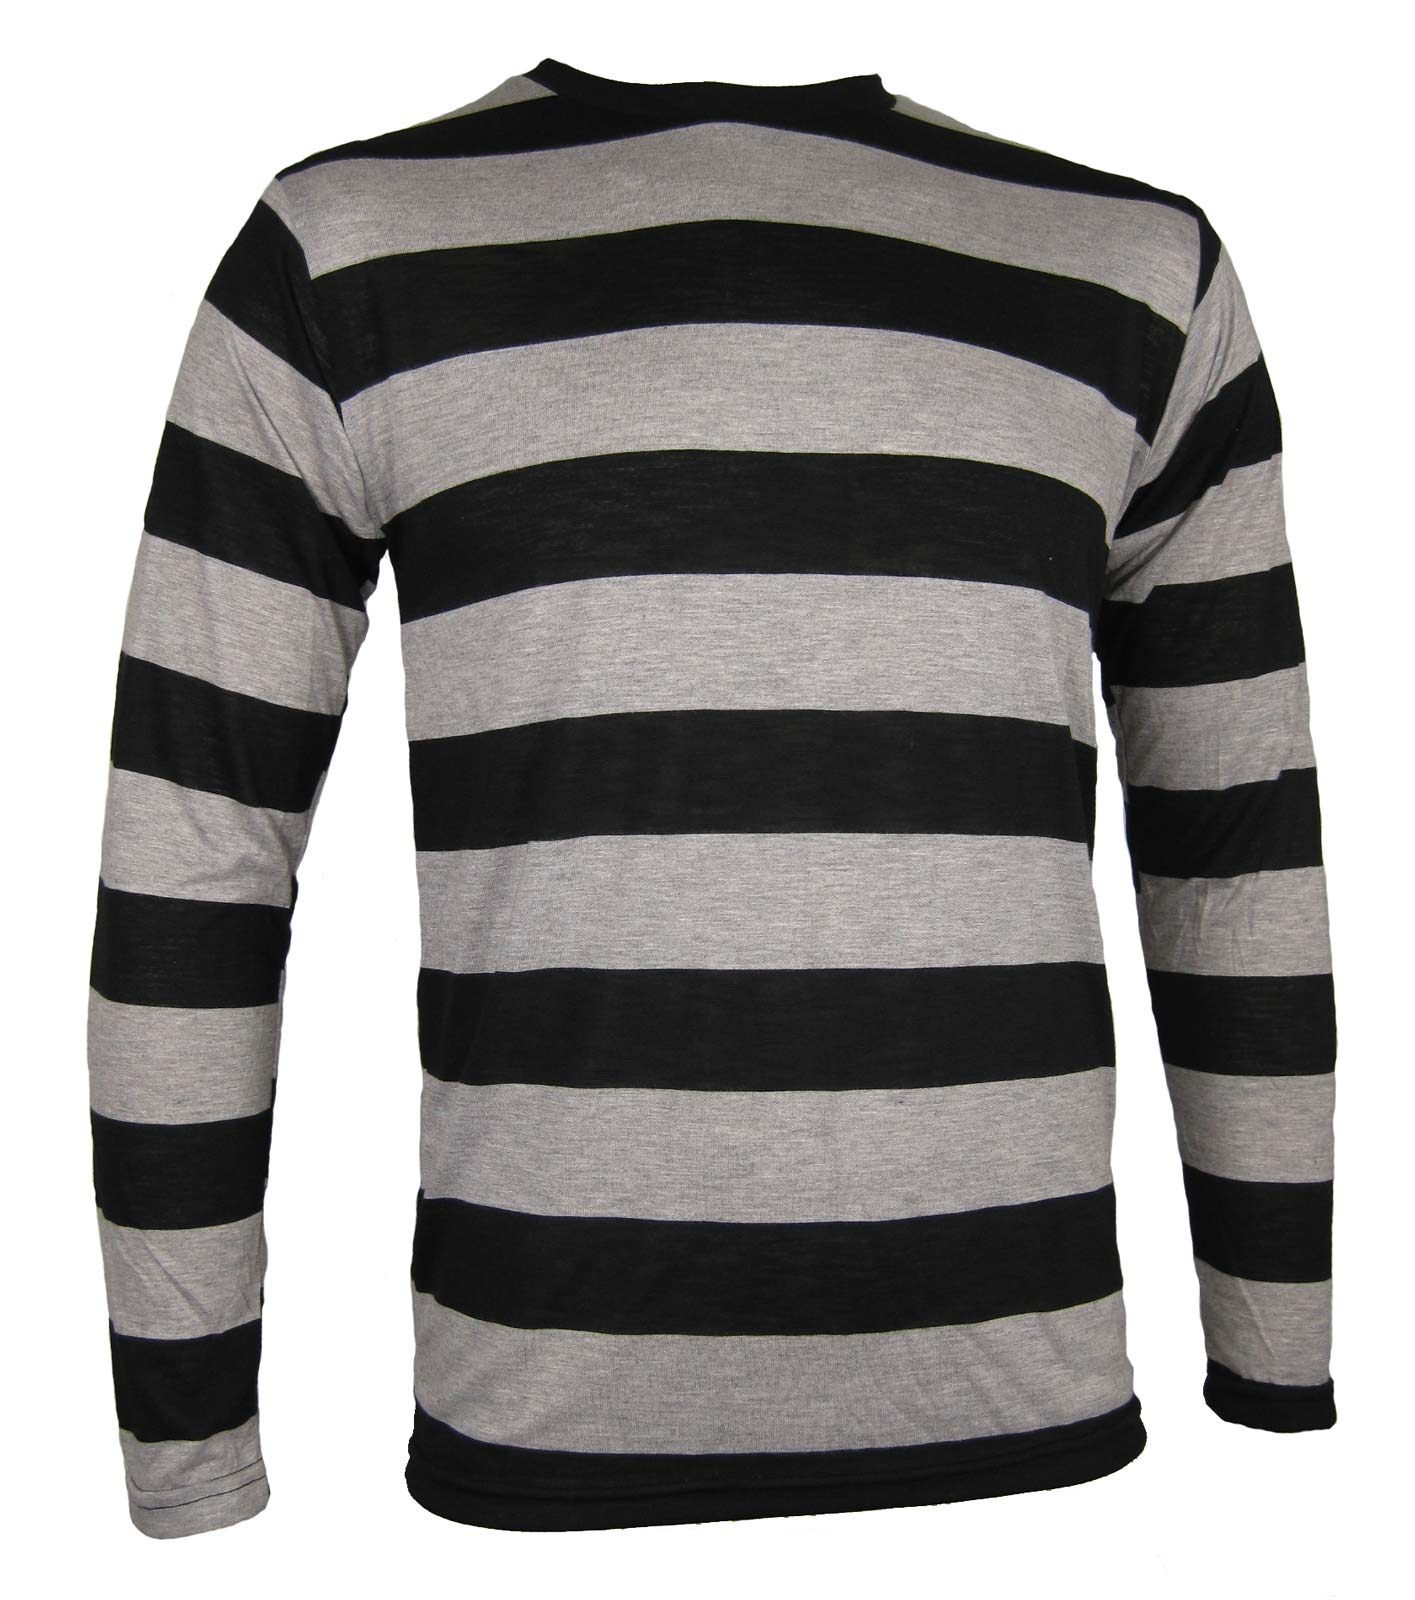 NYC Long Sleeve Punk Goth Emo Stripe Striped Shirt Black Light Grey s M L XL